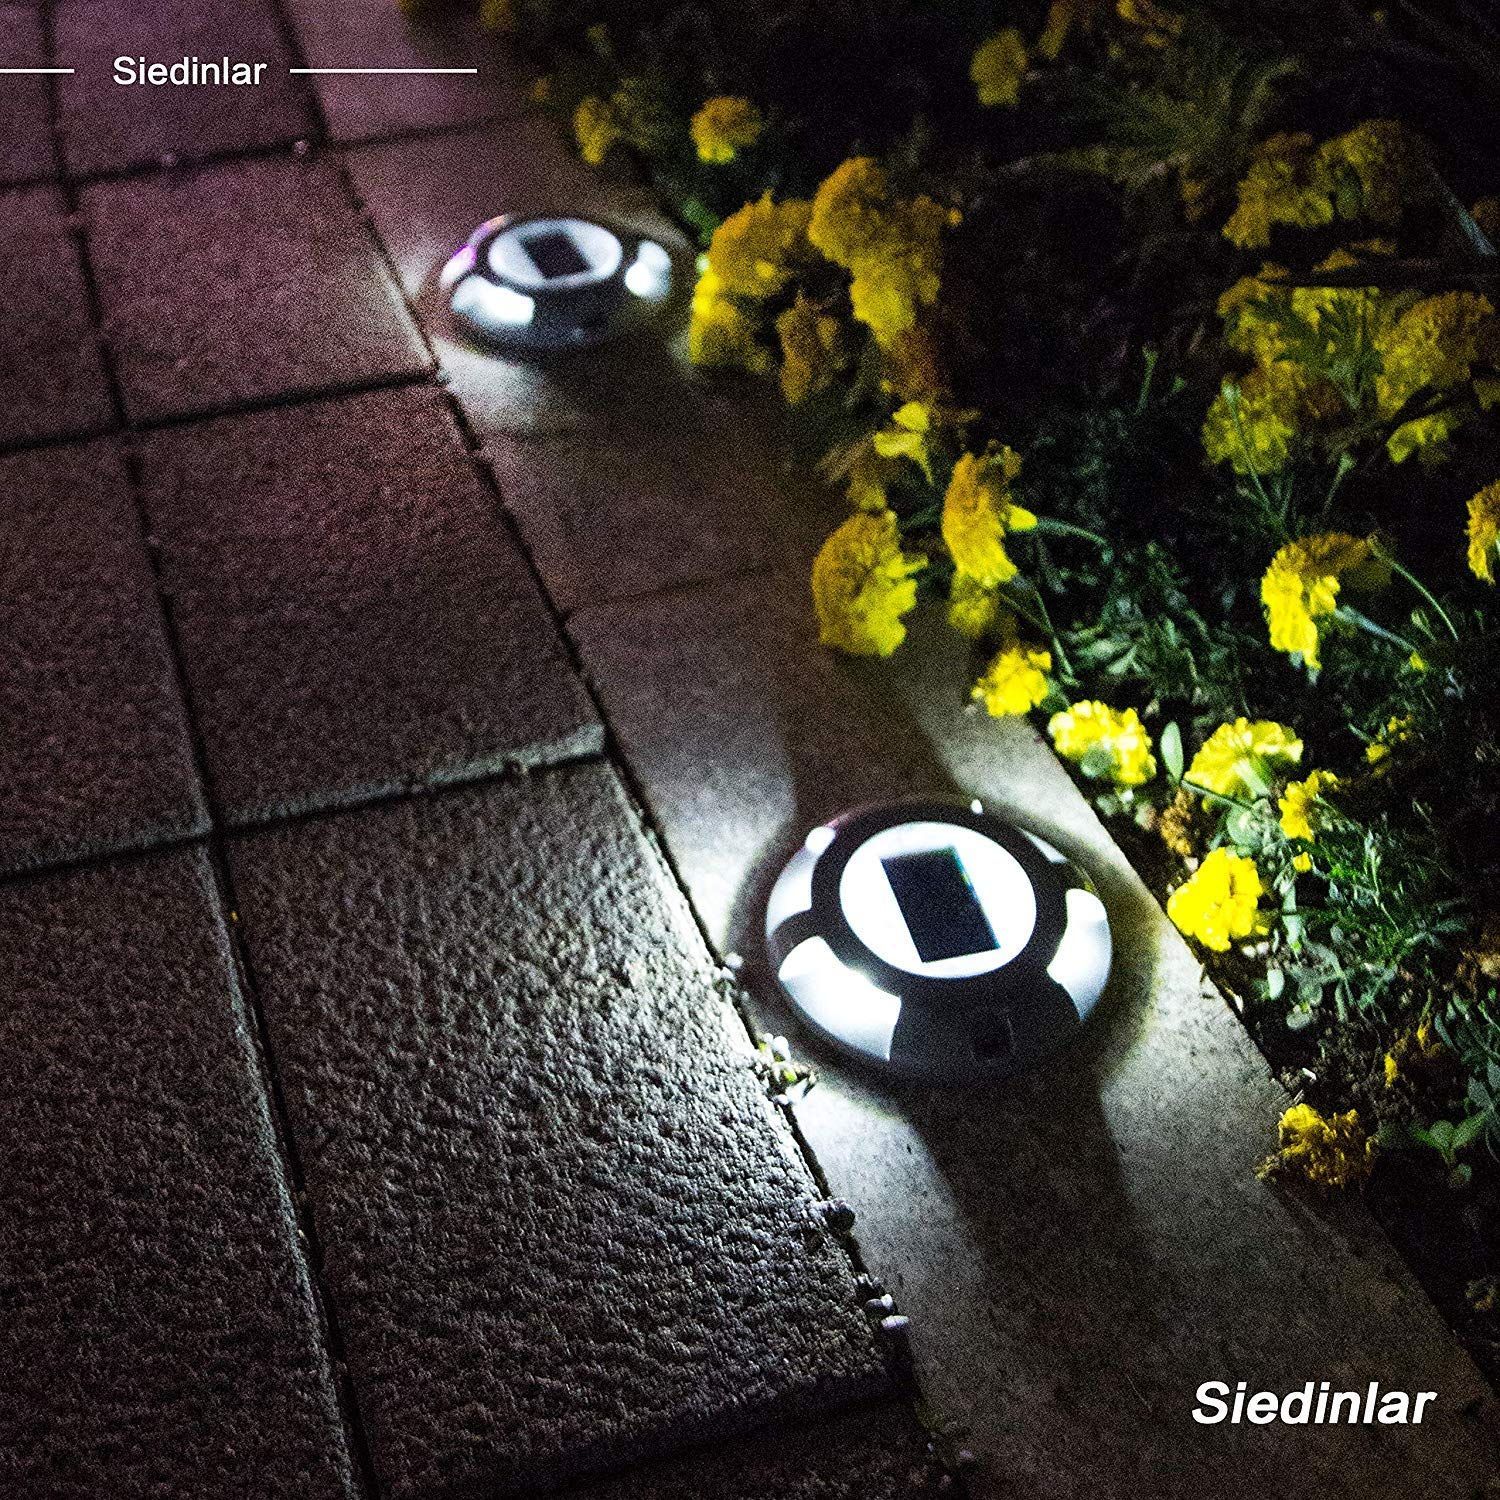 Siedinlar ガーデンライト 埋め込み式 ソーラーライト 屋外 防水 LED